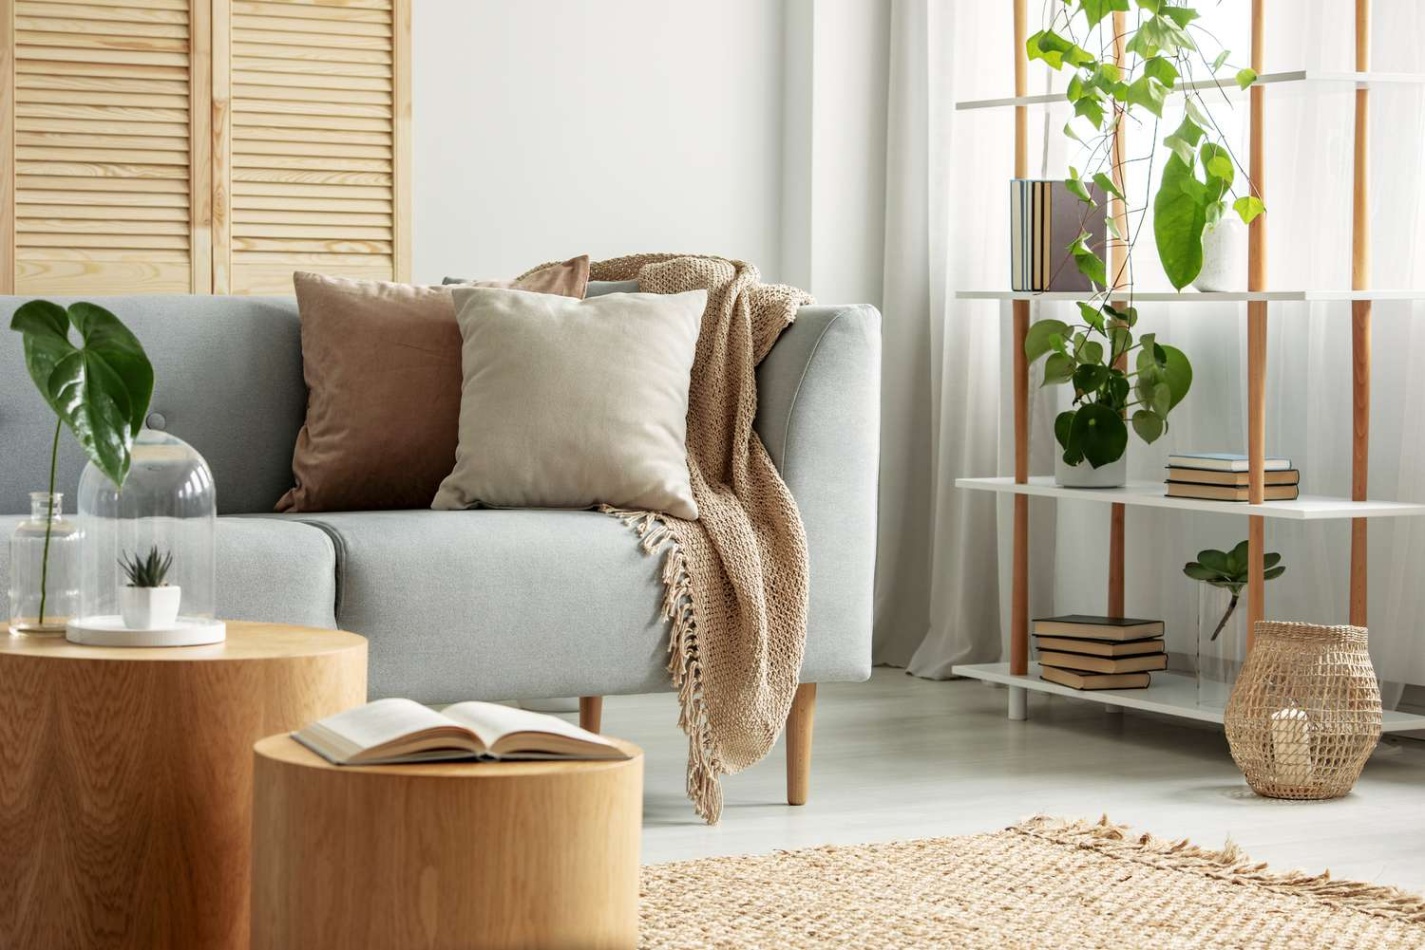 Easy Peasy Interior Design Tips For A Cozy Home Makeover